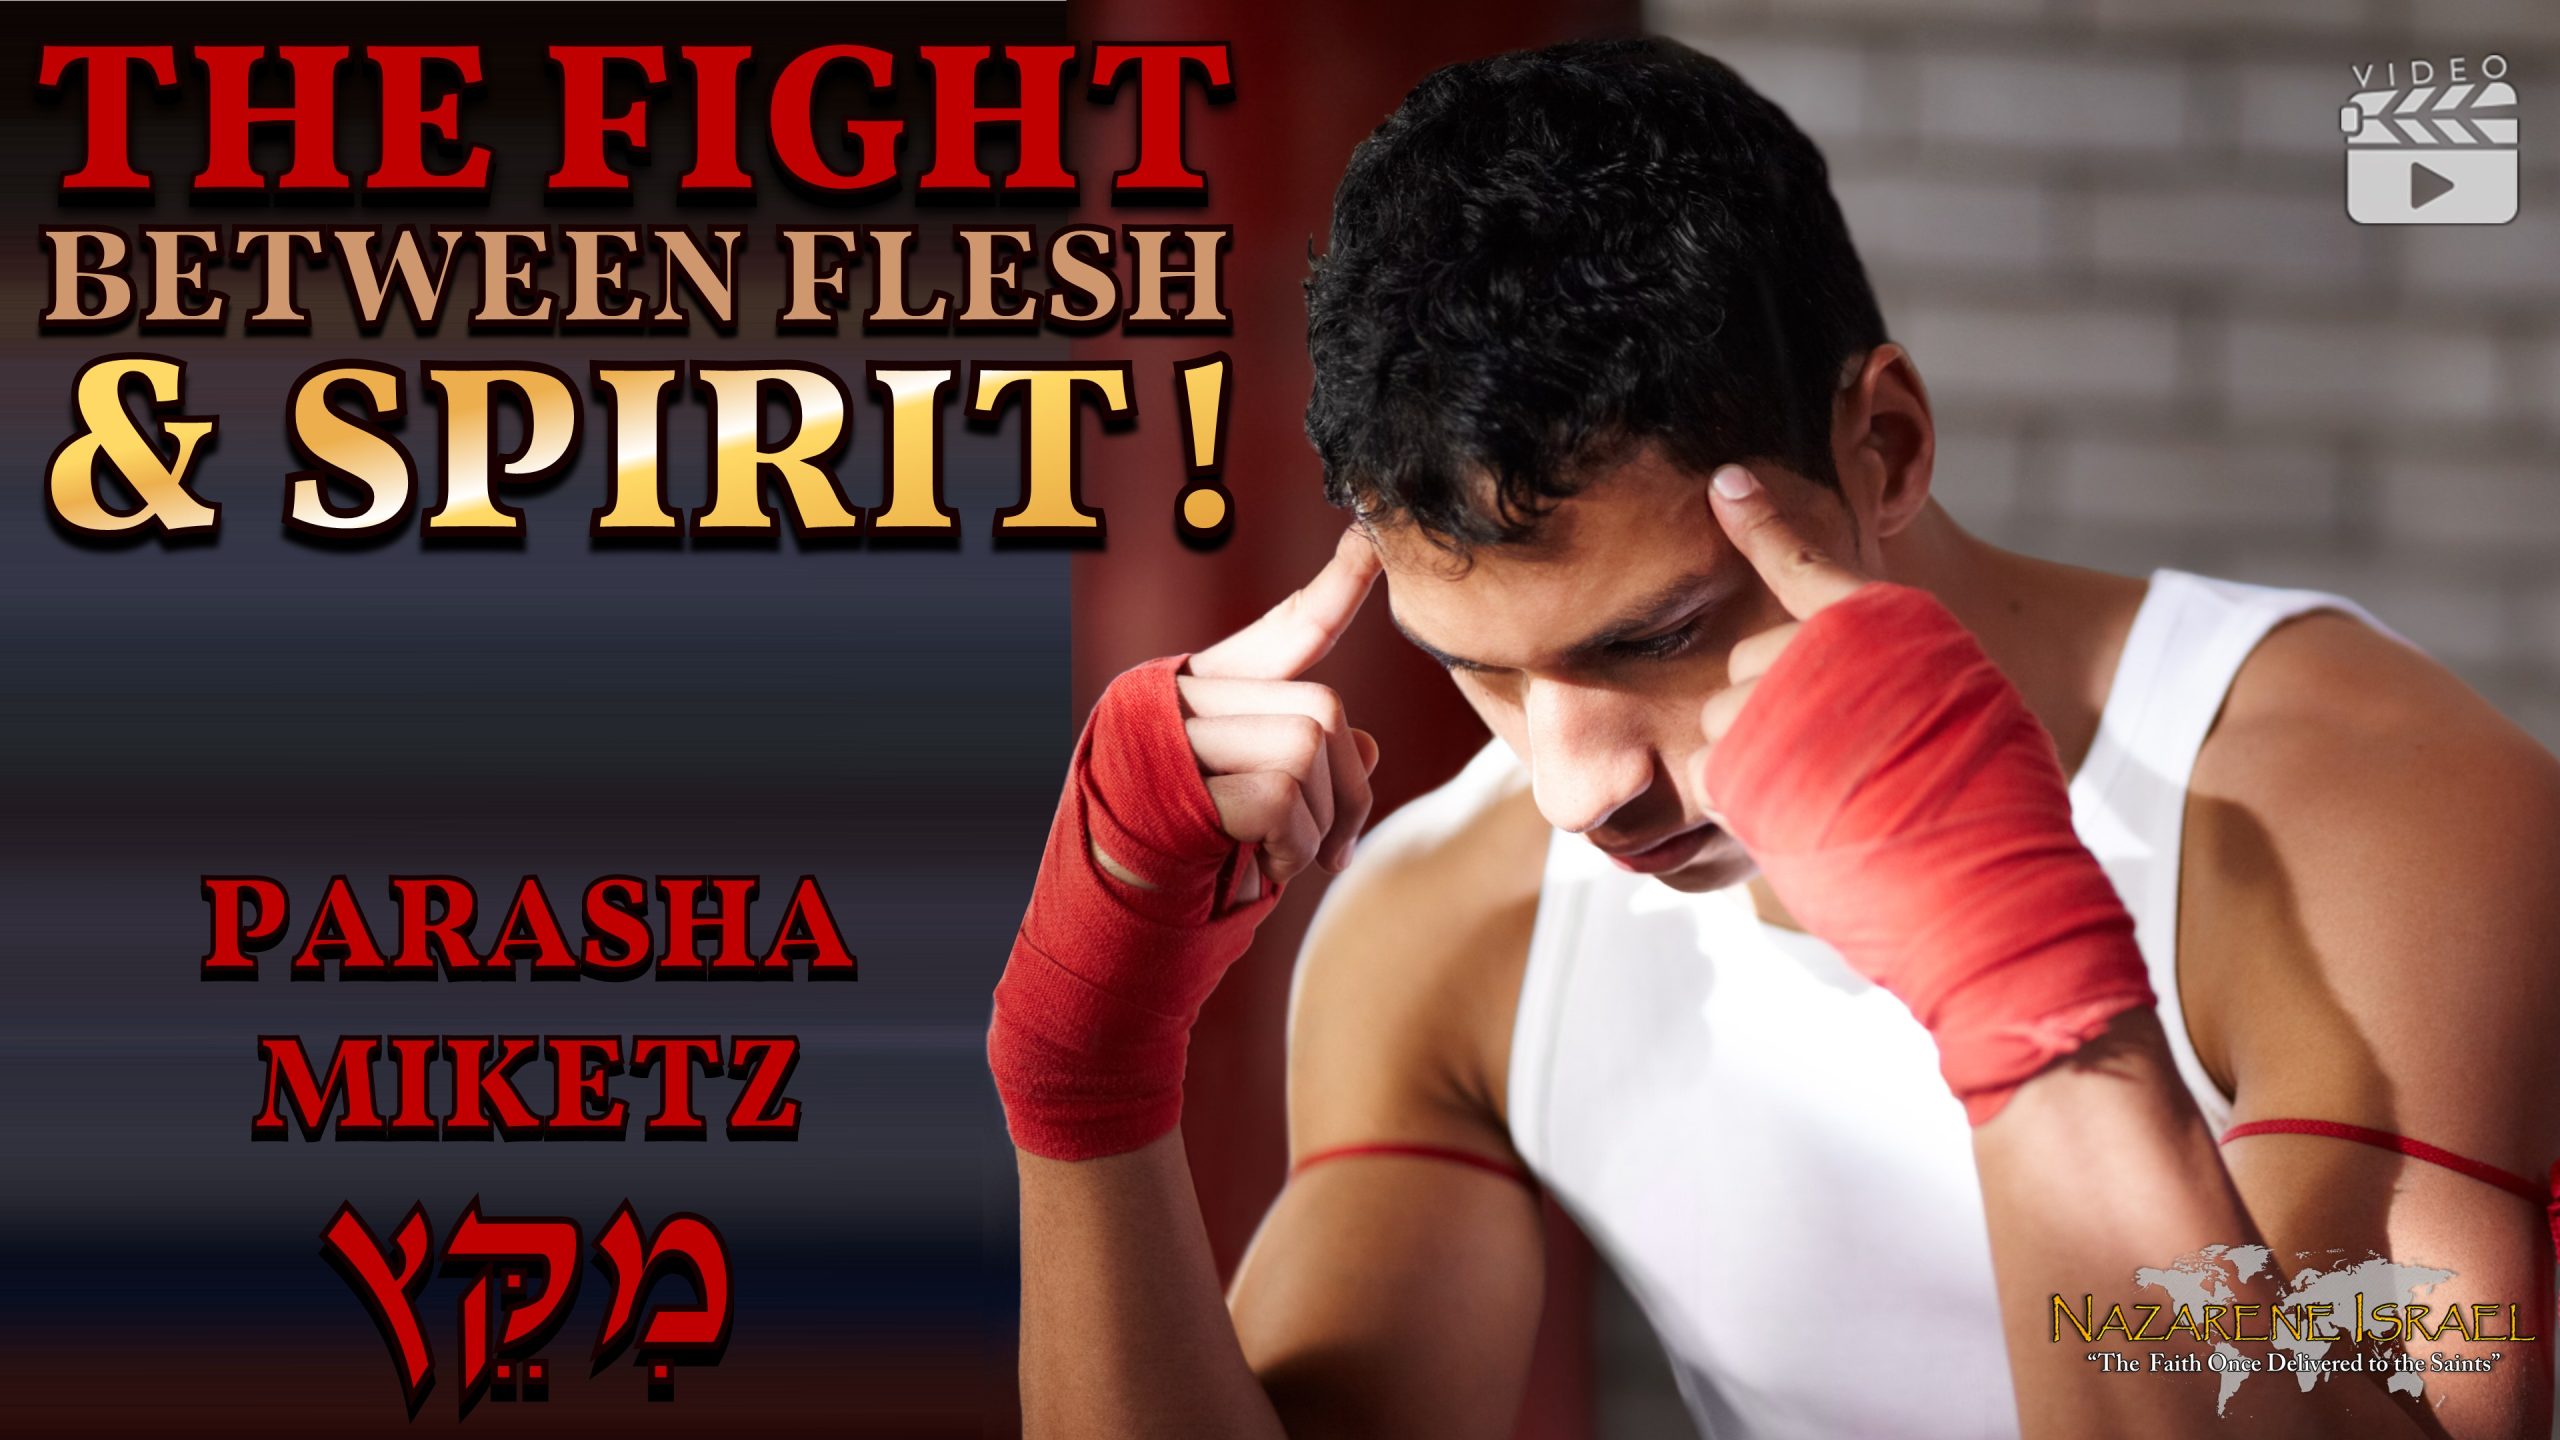 Parasha Miketz 2023 – “The Fight Between Flesh and Spirit!”